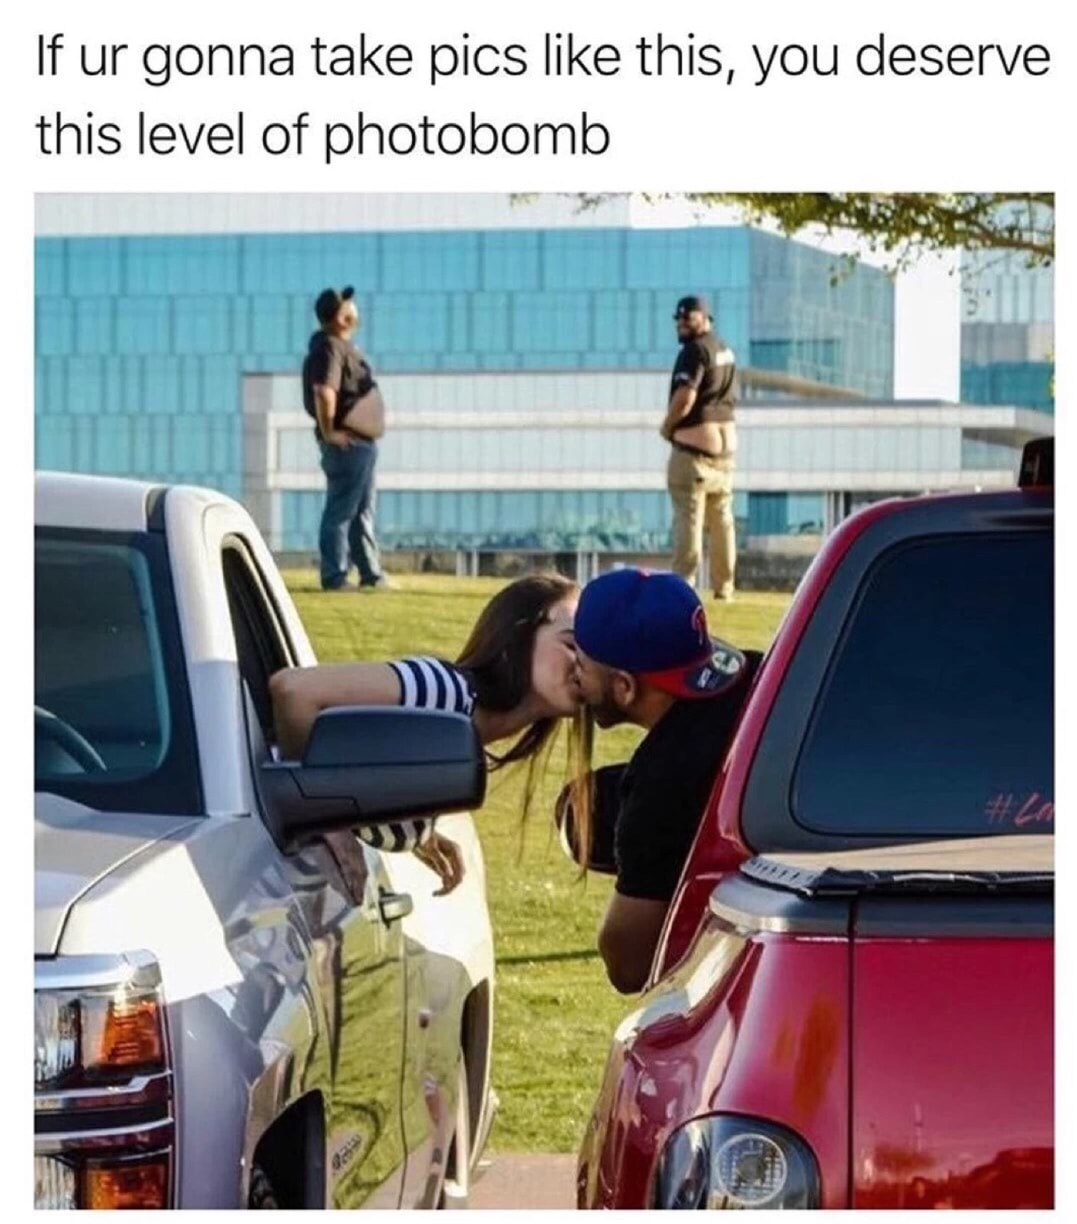 memes - photobomb meme car - If ur gonna take pics this, you deserve this level of photobomb